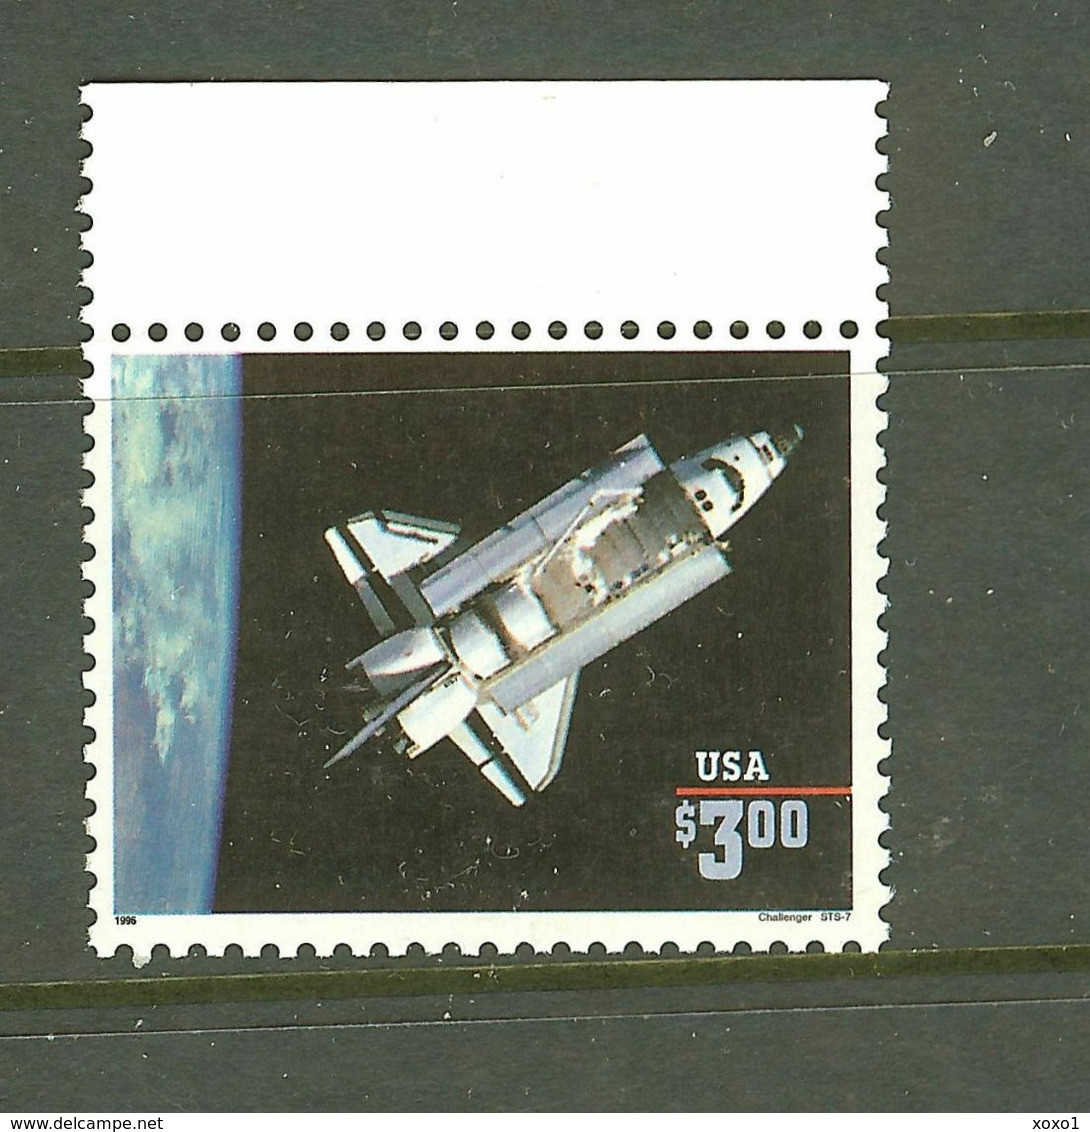 USA 1996 MiNr. 2581 II  CHALLENGER SPACE SHUTTLE 1v  MNH**  8.50 € - United States